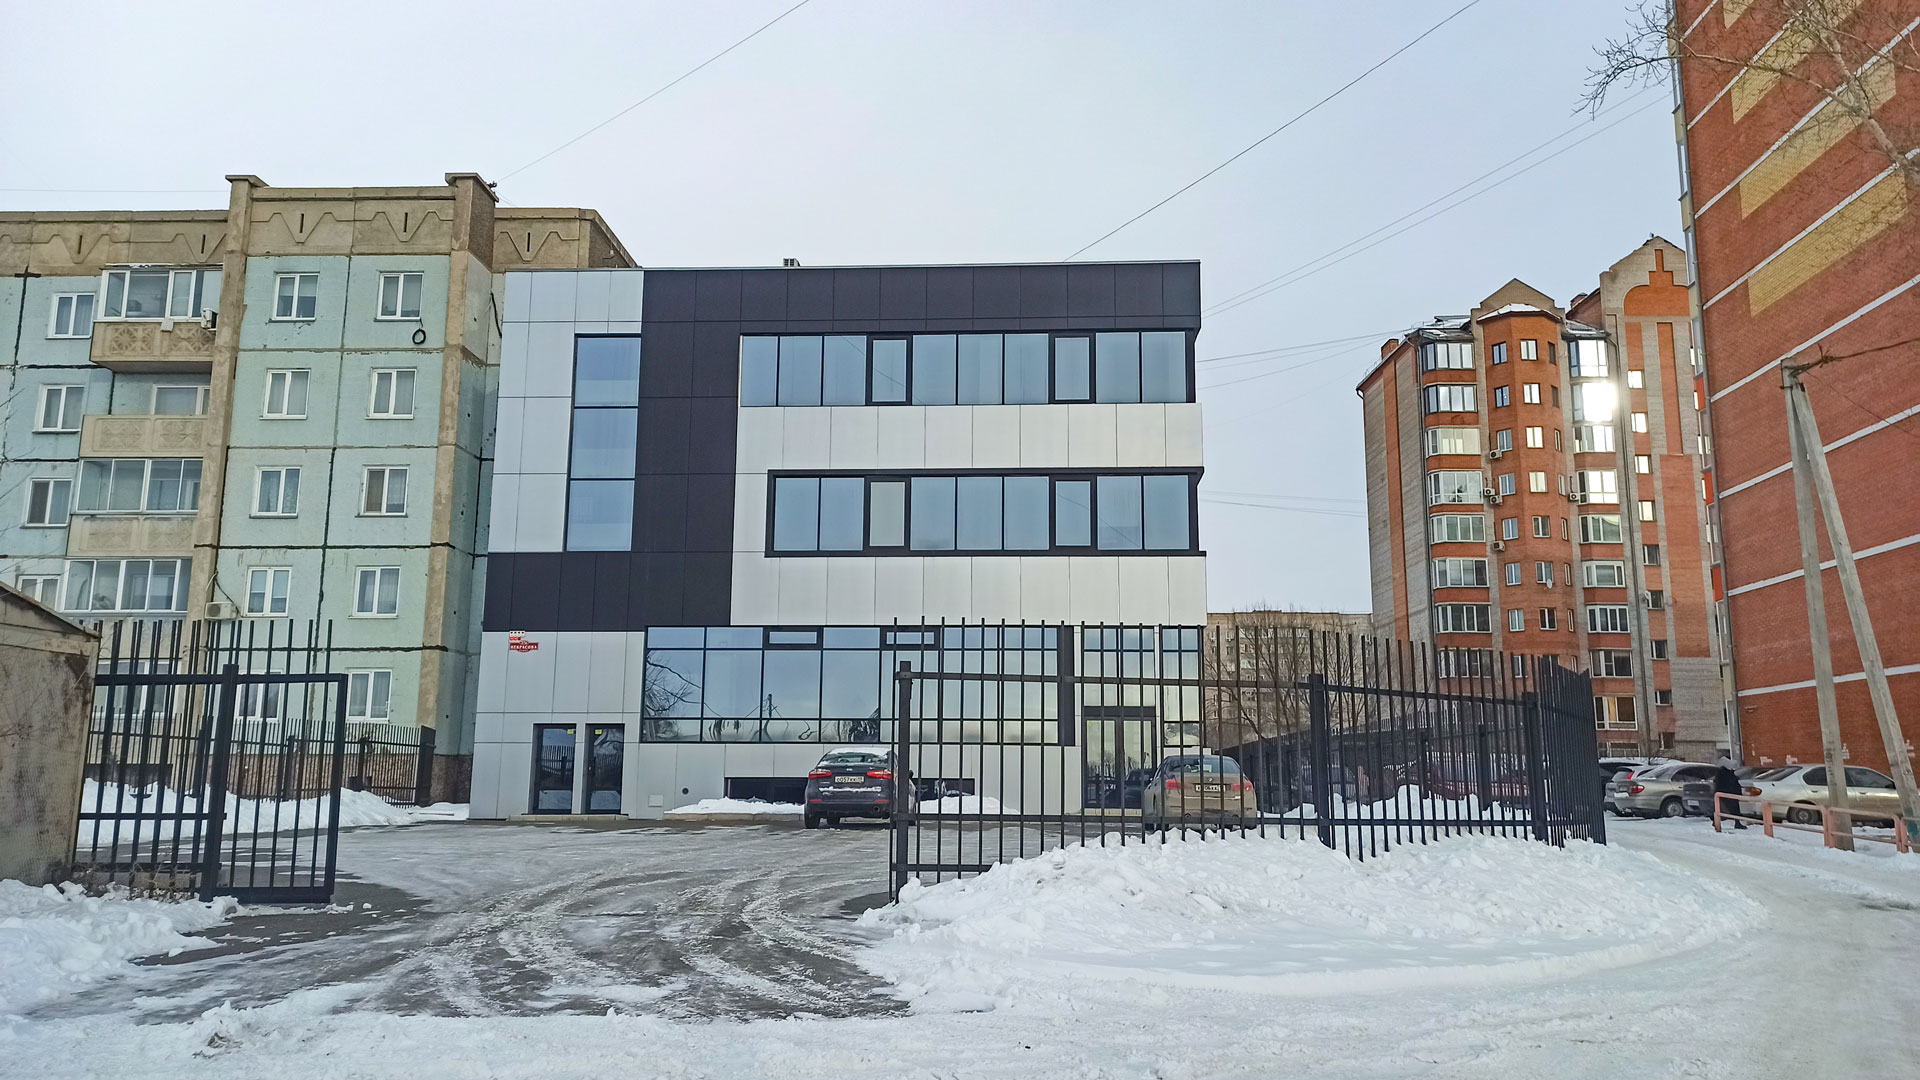 Строительная компания "Старт Сибири" офис в г. Абакан.